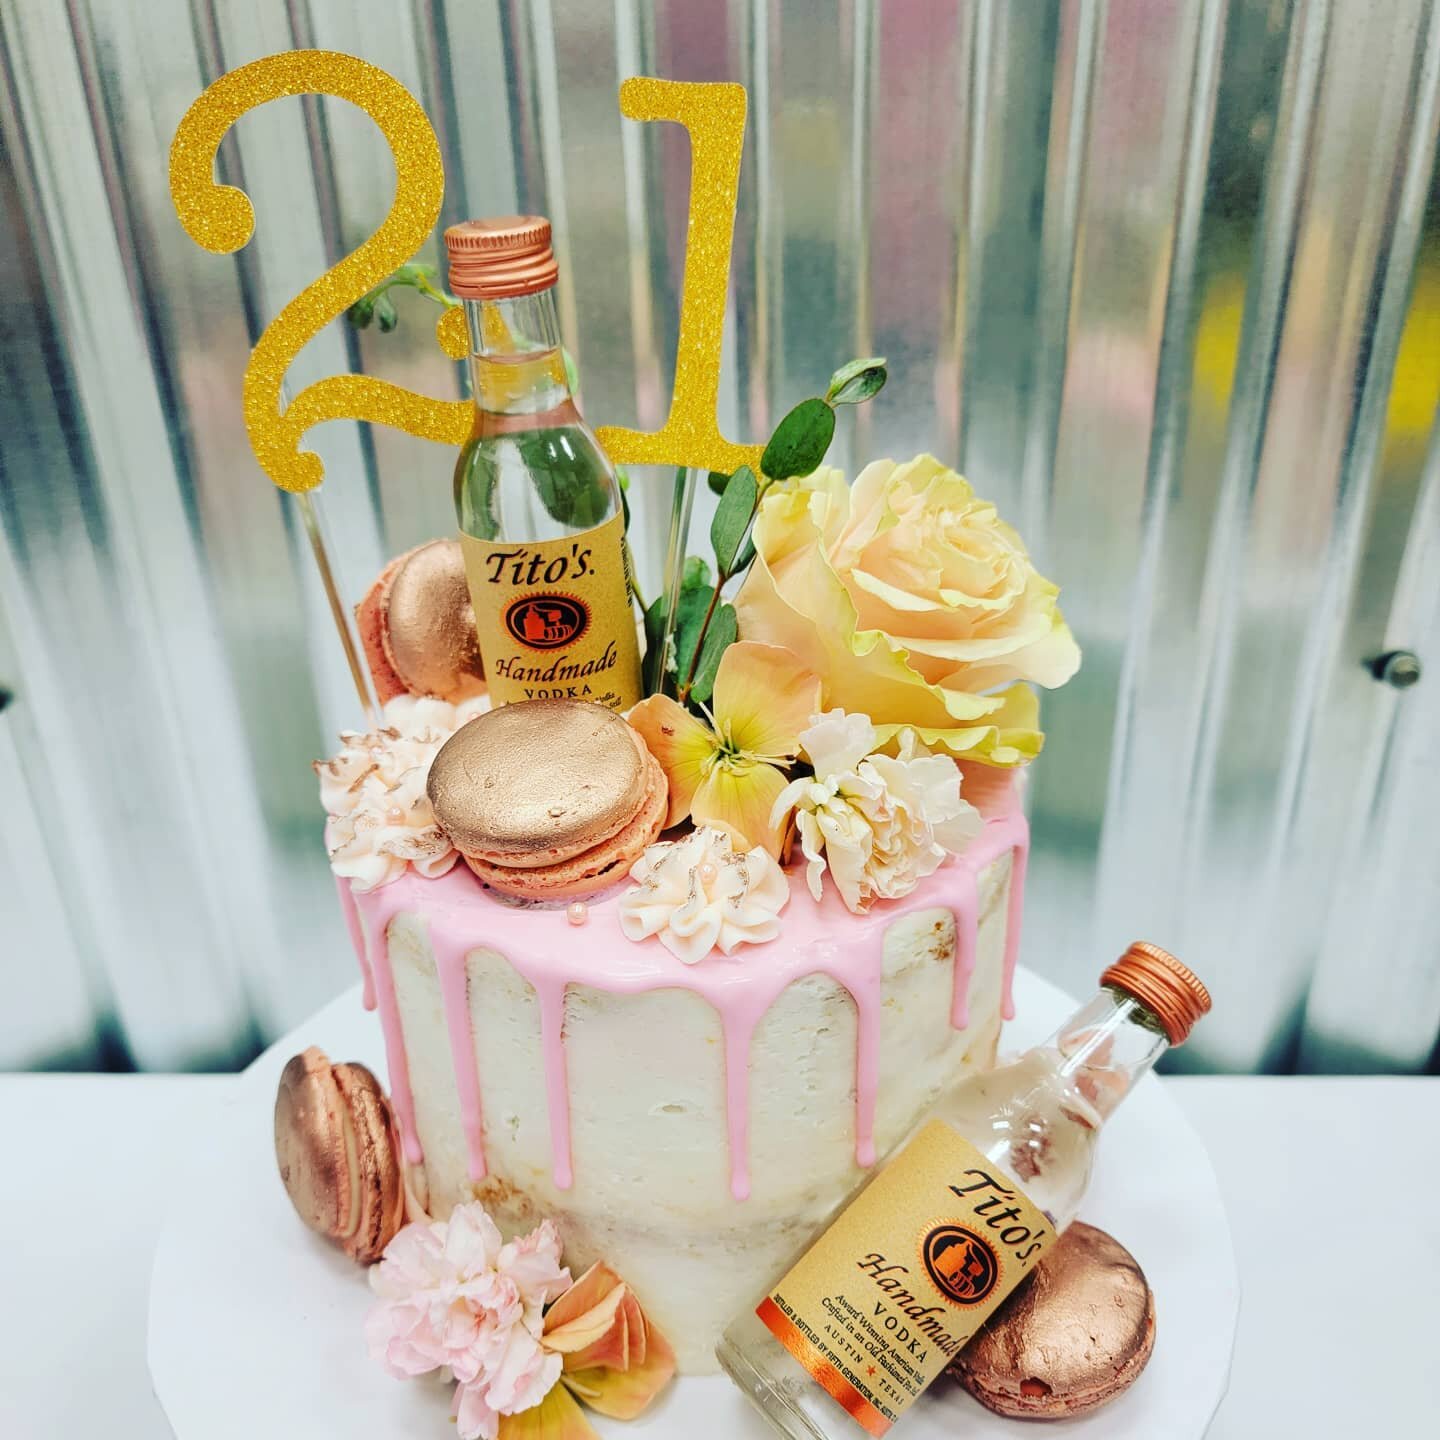 Celebrating a 21st birthday with an elegant cake!

#sweetnessinyourlife #bestcakeson30a #birthdaycakes #cakesofinstagram #seagroveplaza #southwalton #30alocalbusiness #madefromscratch #madewithlove #sweeton30a